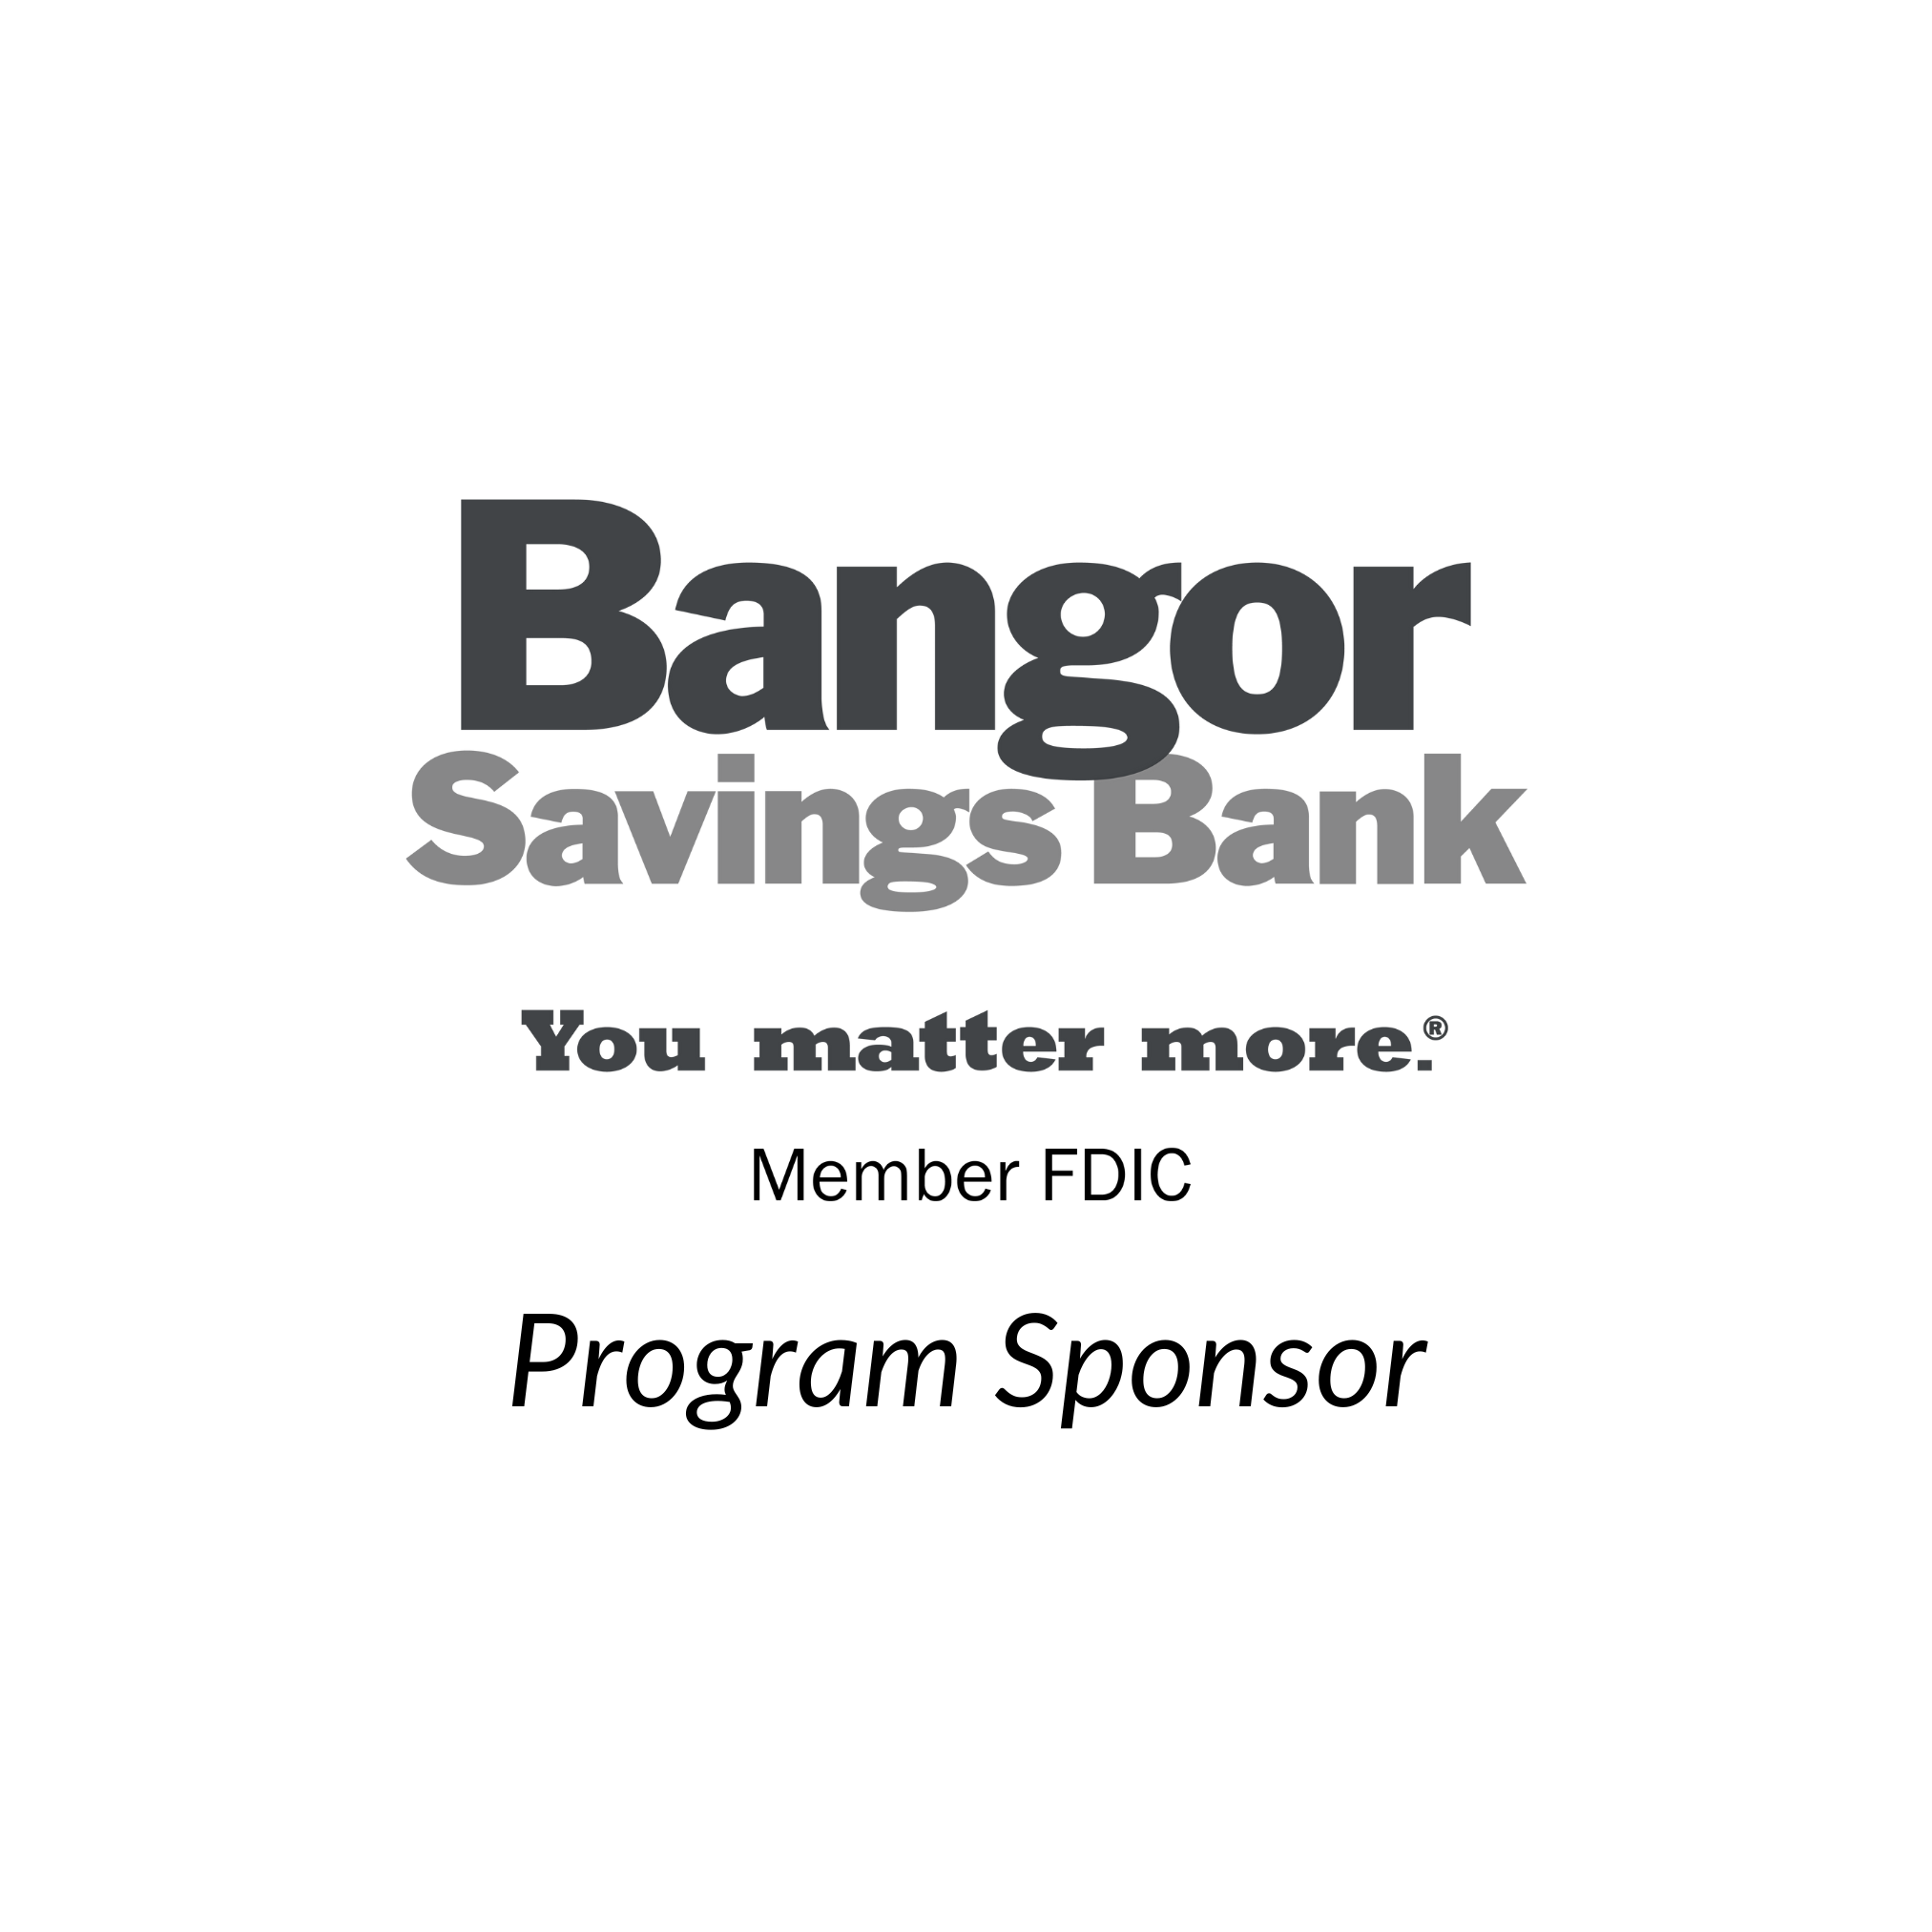 BangorSavingsBank.png